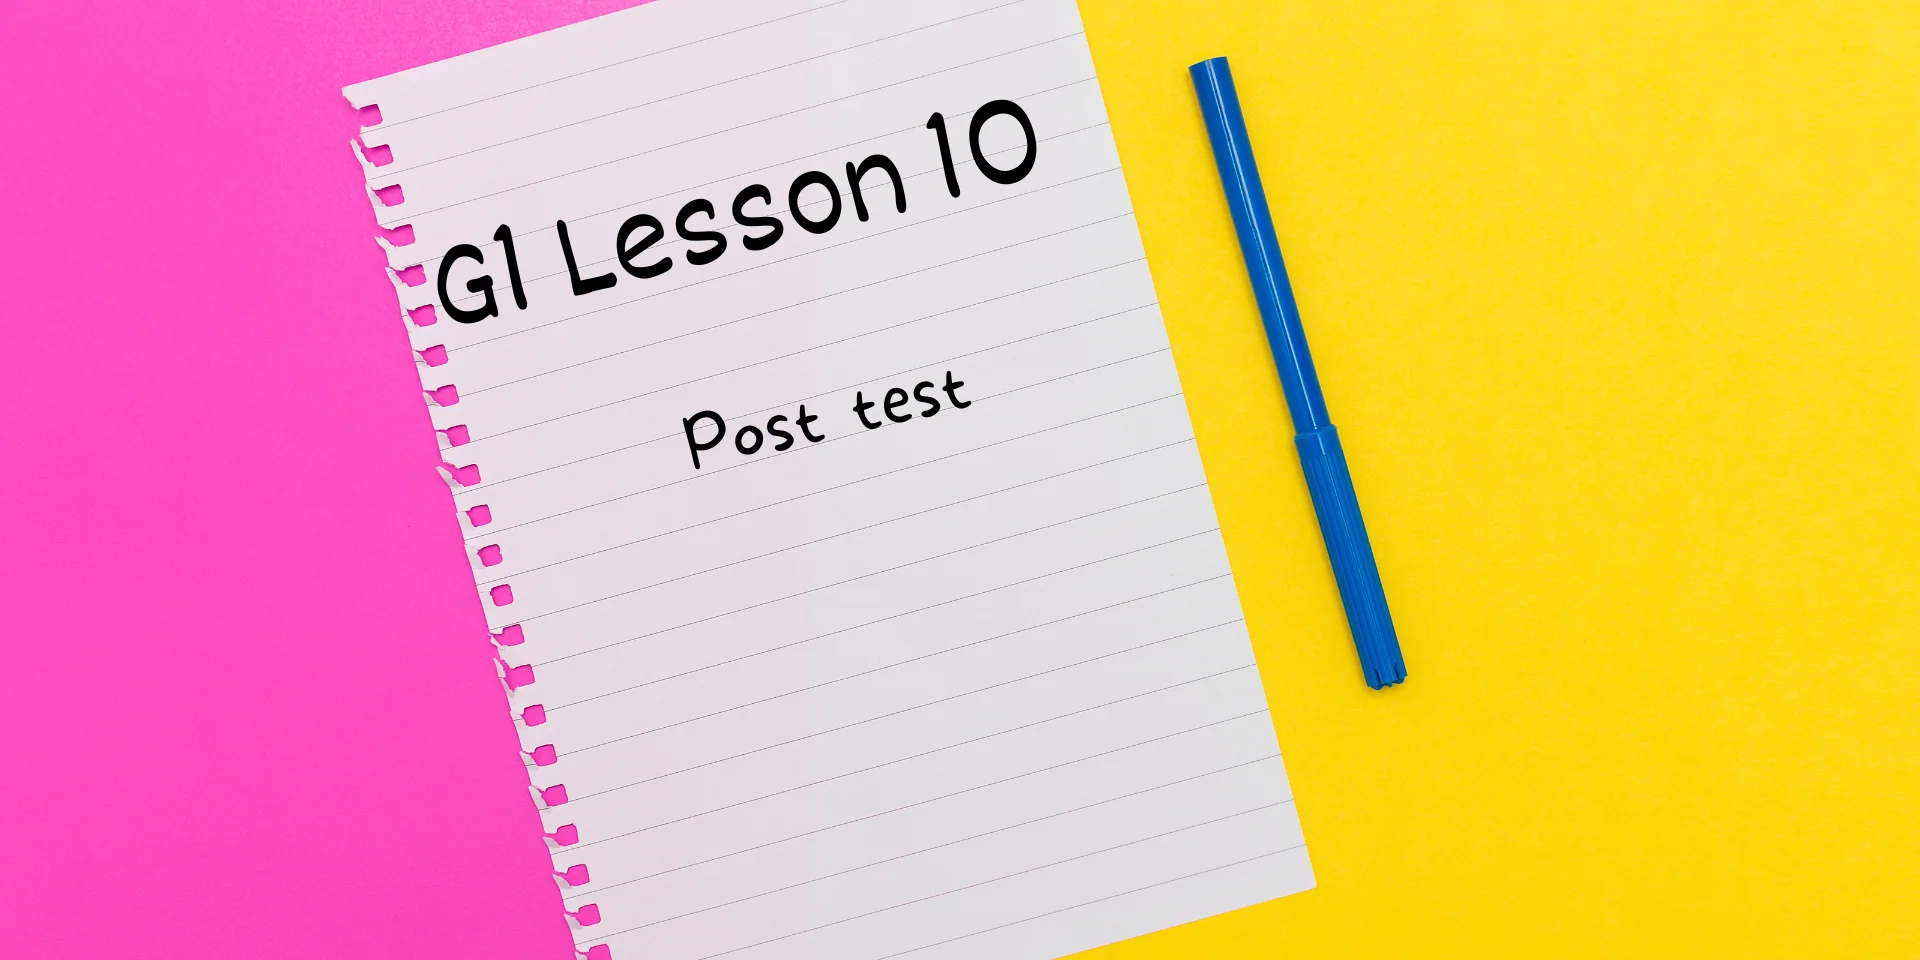 G1 Lesson 10 Post-test